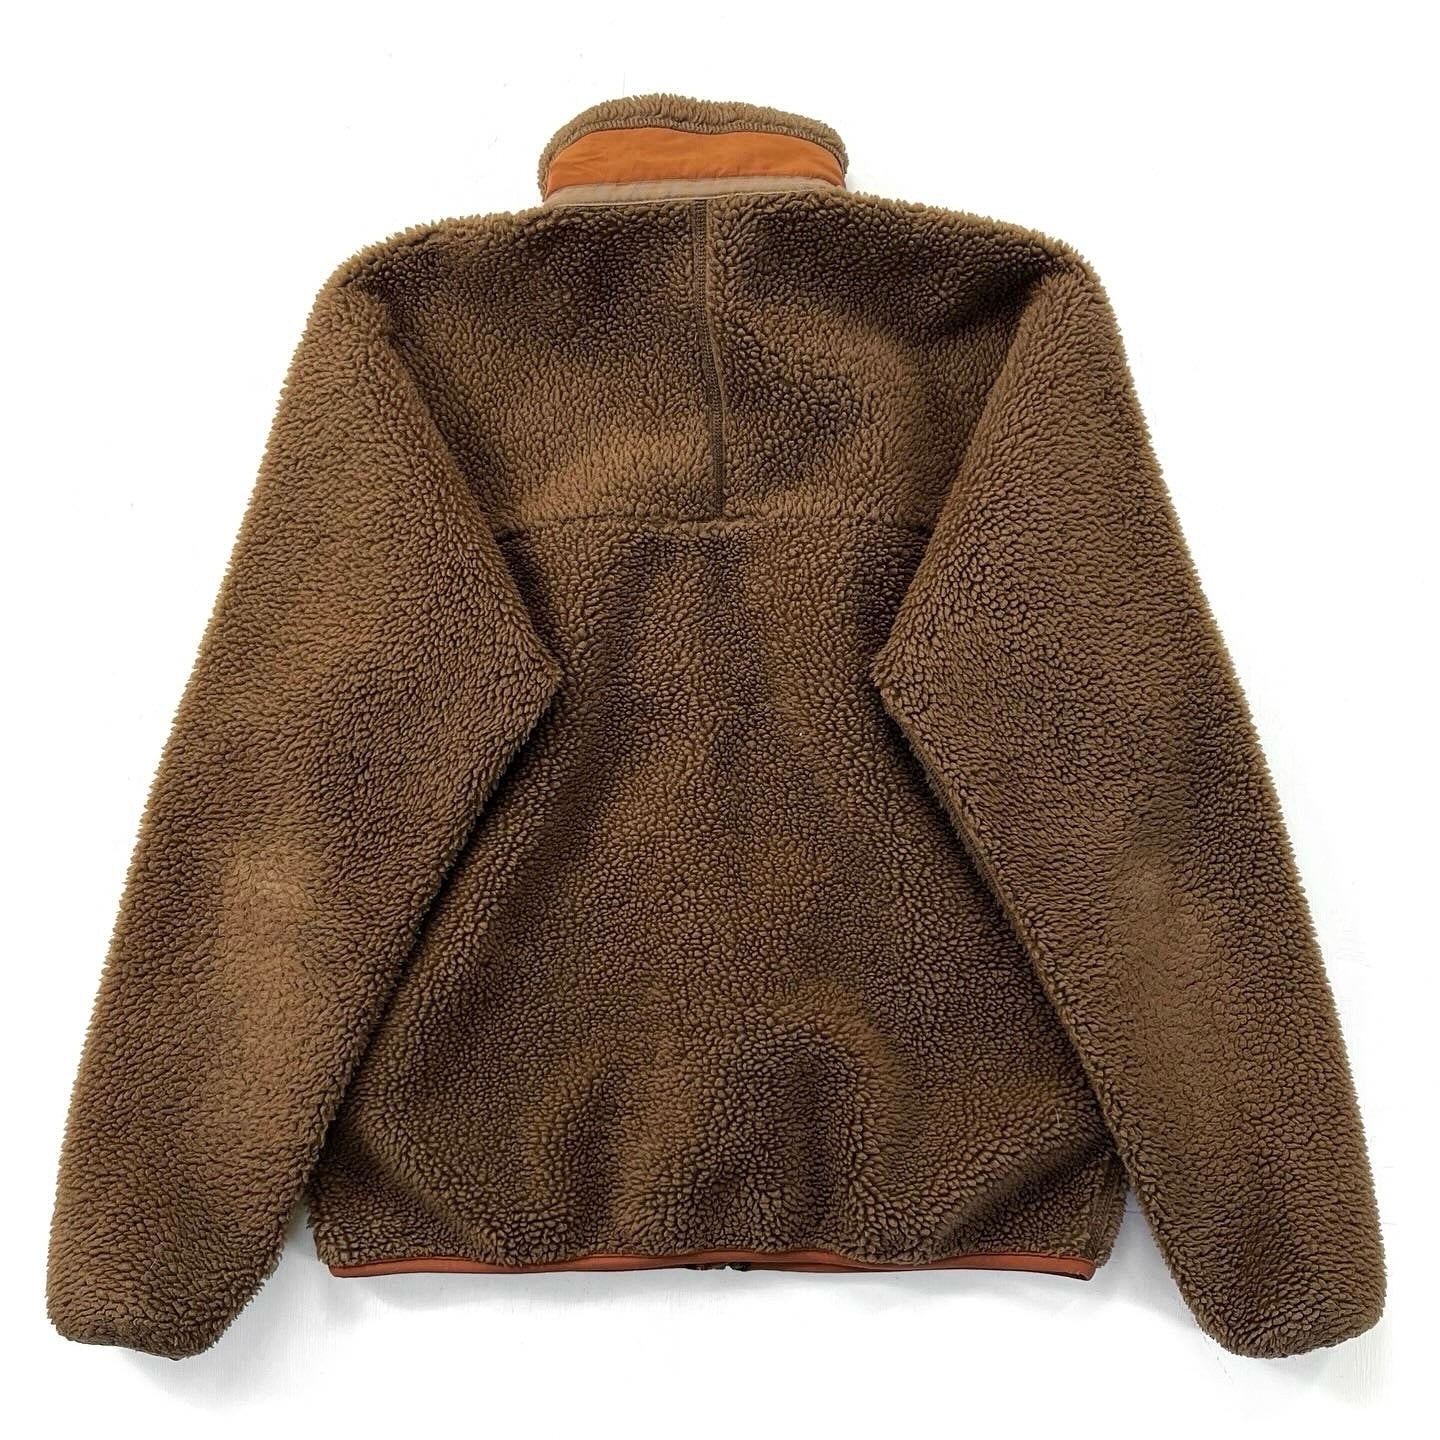 2009 Patagonia Classic Retro-X Fleece Jacket, Henna Brown (S)